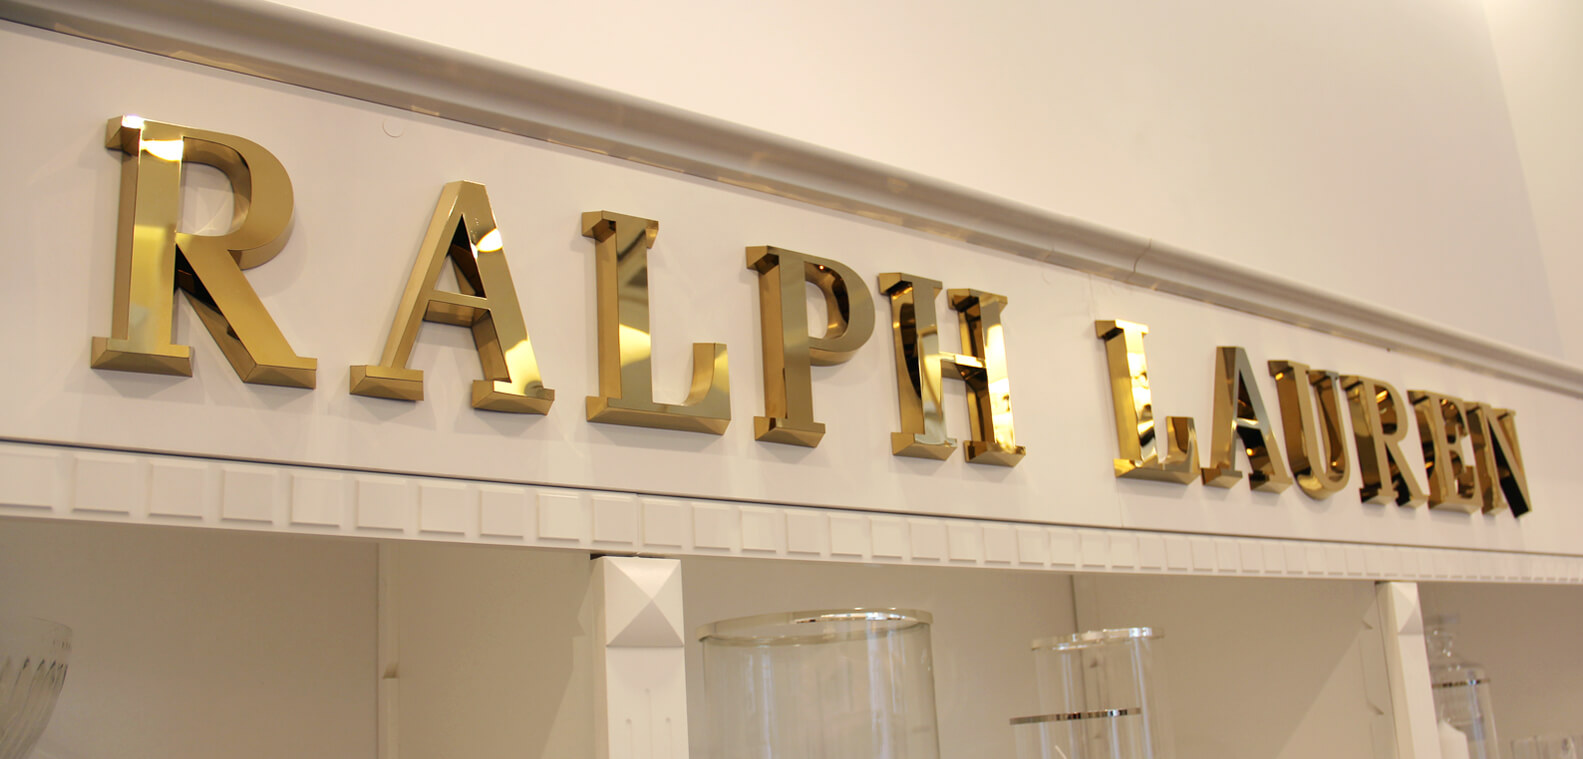 Ralph Lauren - Ralph Lauren - gold block letters made of stainless steel